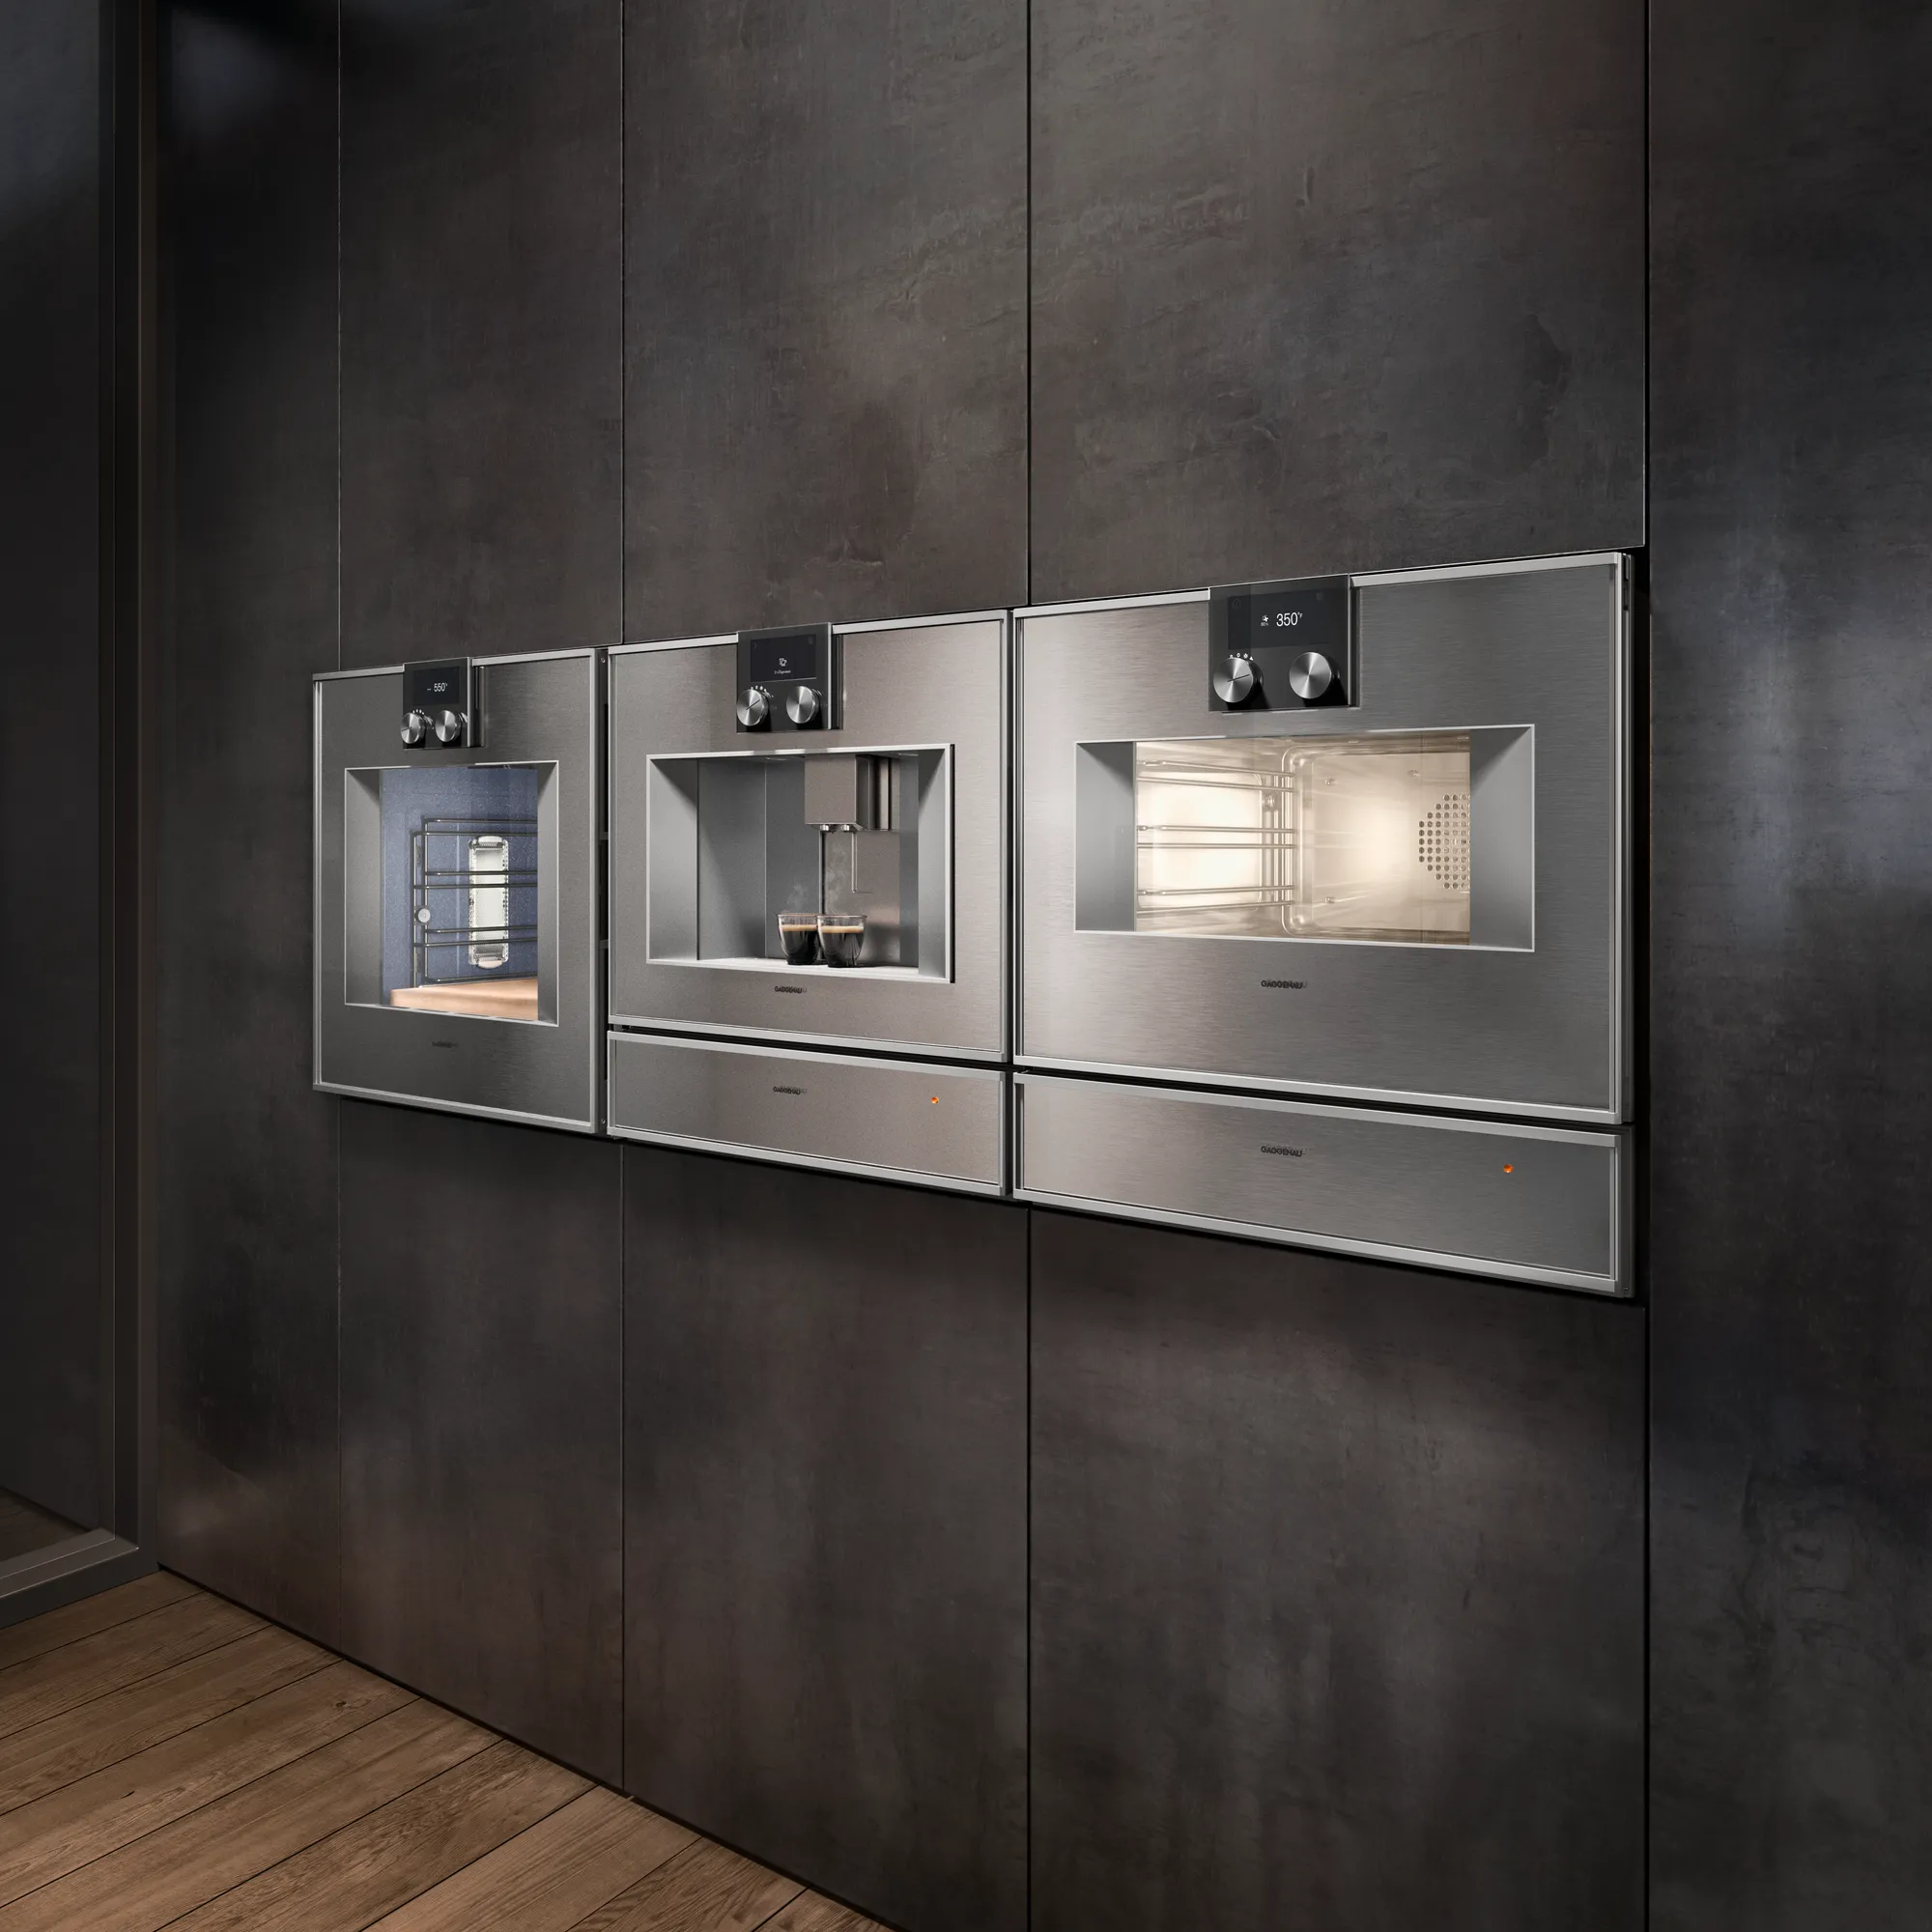 Luxury kitchen appliance brand Gaggenau 400 series oven. Buy in the UK with Krieder.